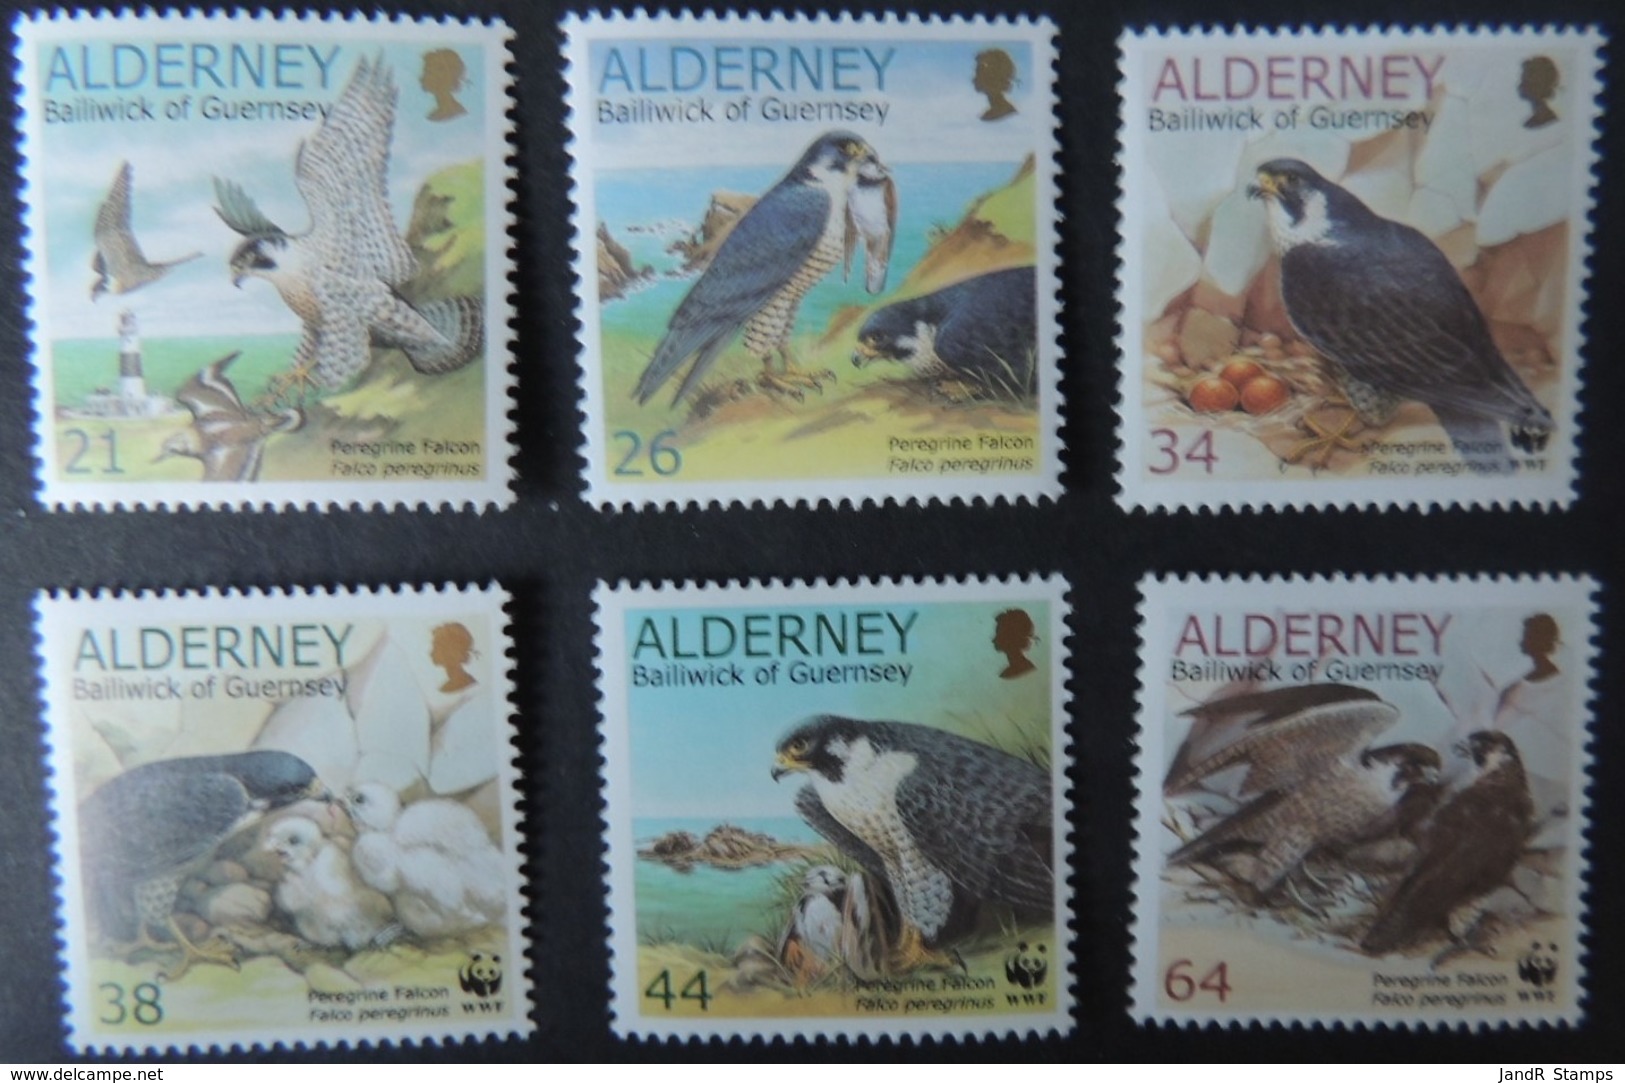 ALDERNEY 2000 ENDANGERED SPECIES PERGRINE FALCON 6 VALUES MNH A140-A145 BIRDS OF PREY - Alderney